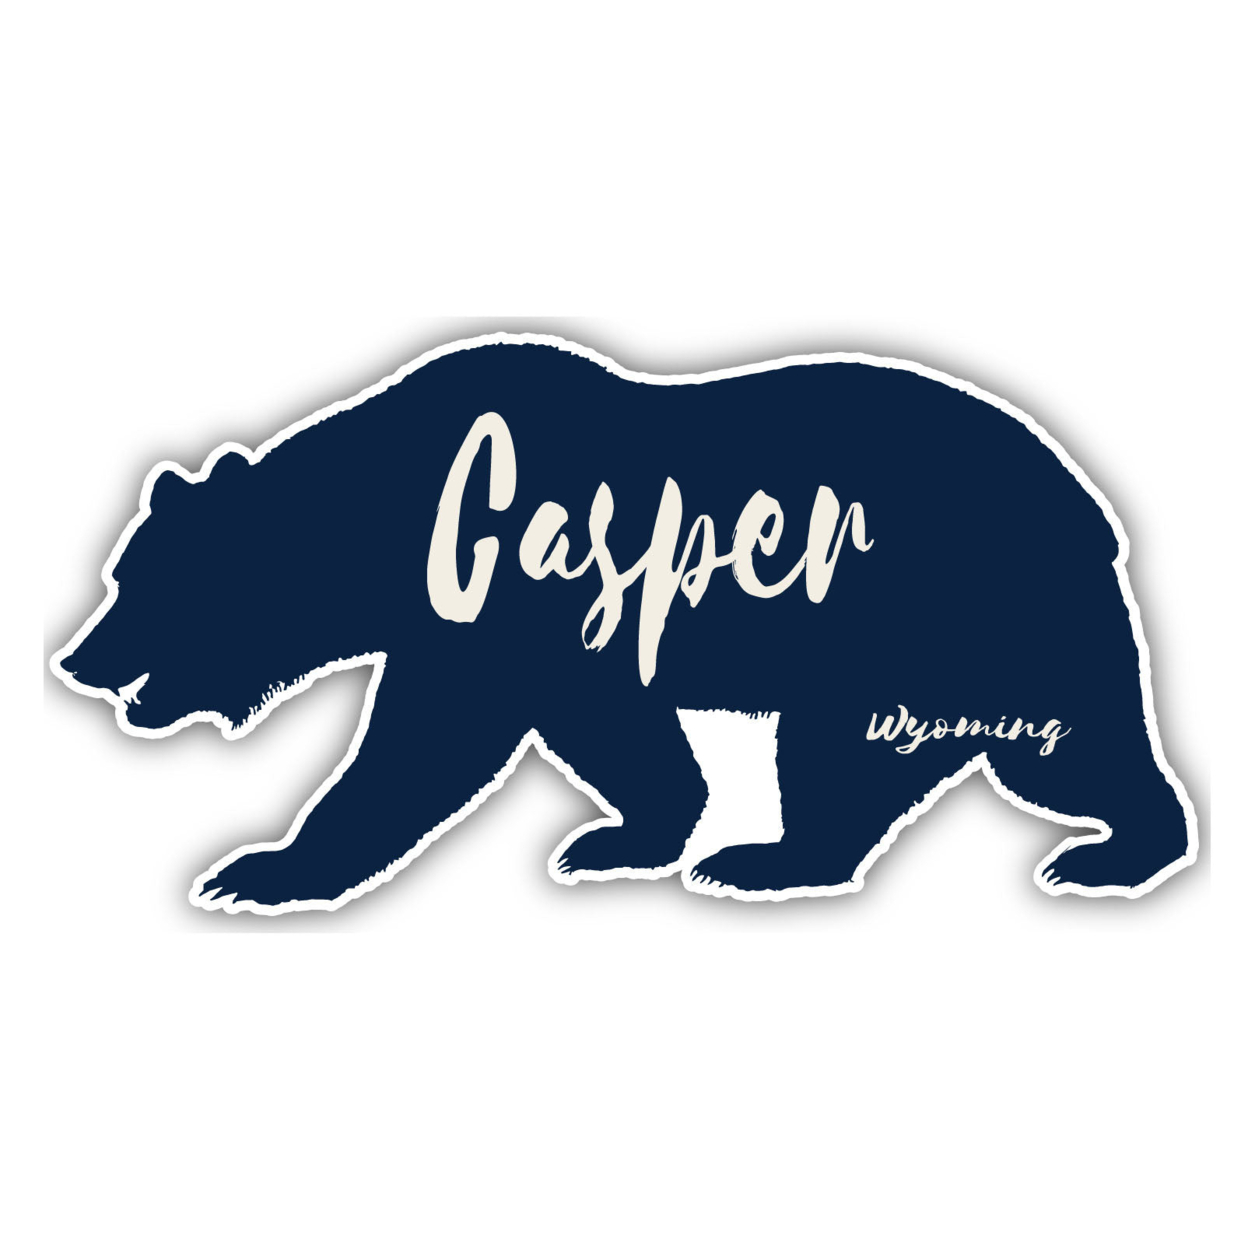 Casper Wyoming Souvenir Decorative Stickers (Choose Theme And Size) - Single Unit, 10-Inch, Bear